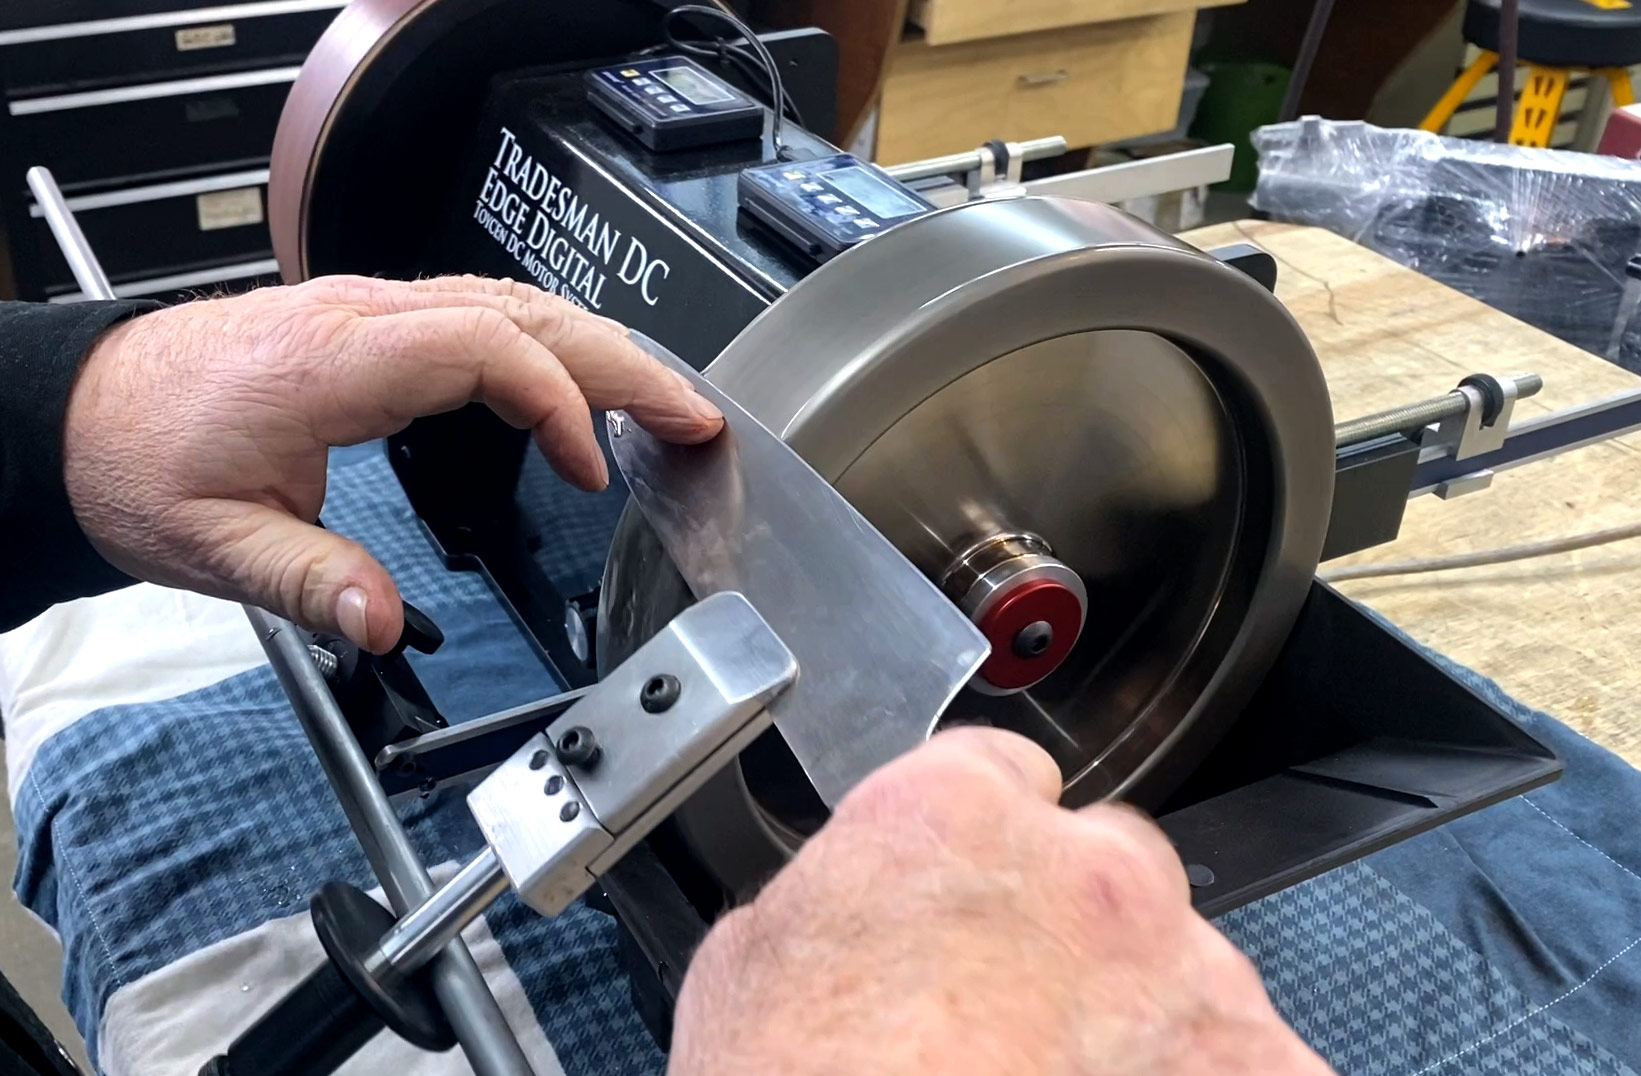 Tradesman Knife Sharpening Angle Measuring Idea - Cuttermasters